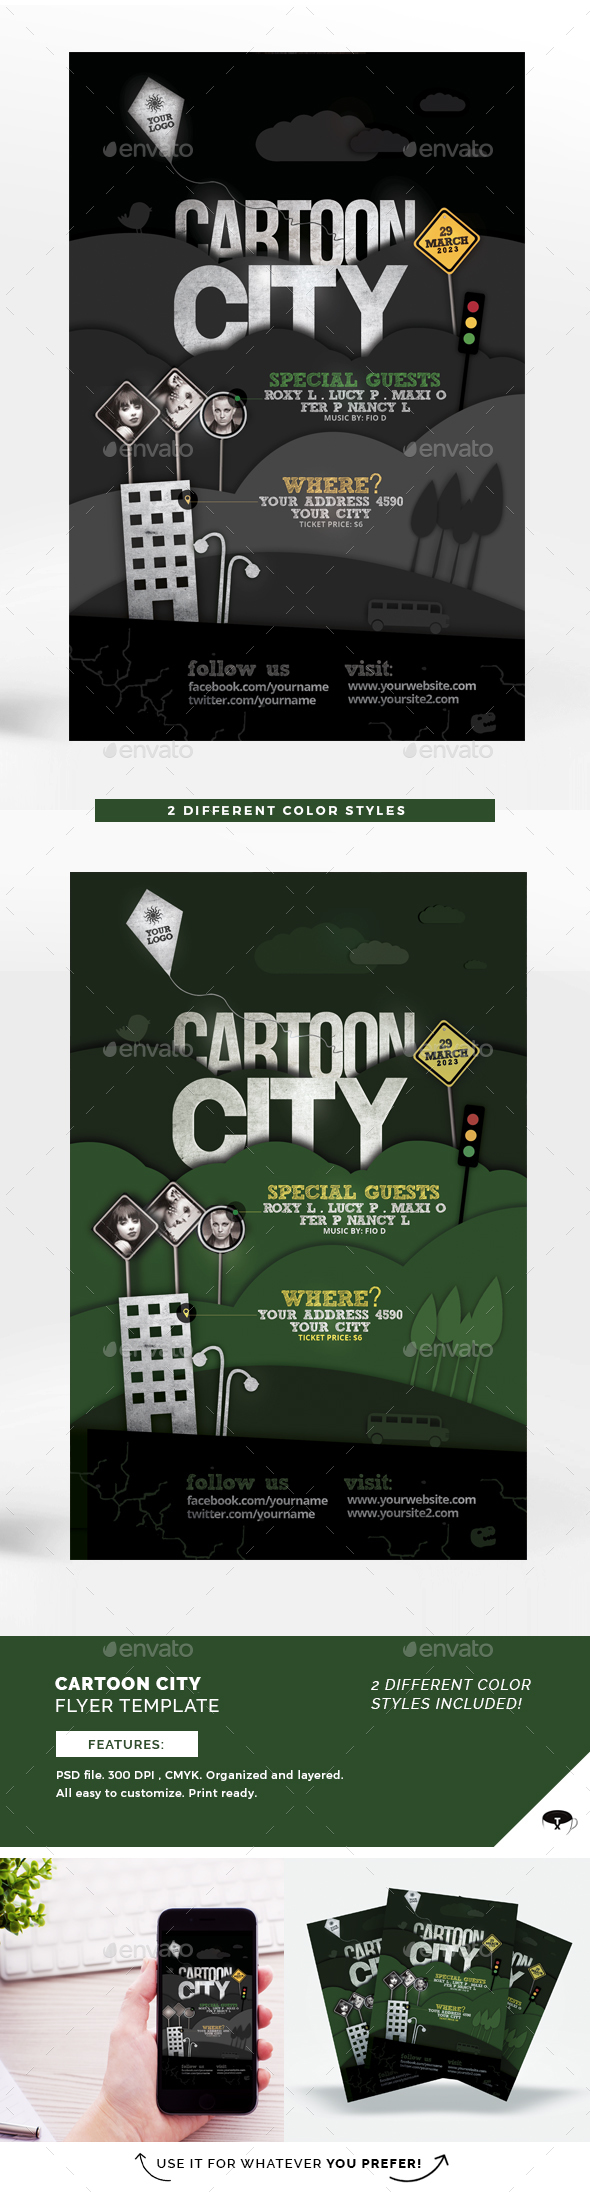 Cartoon City Flyer Template